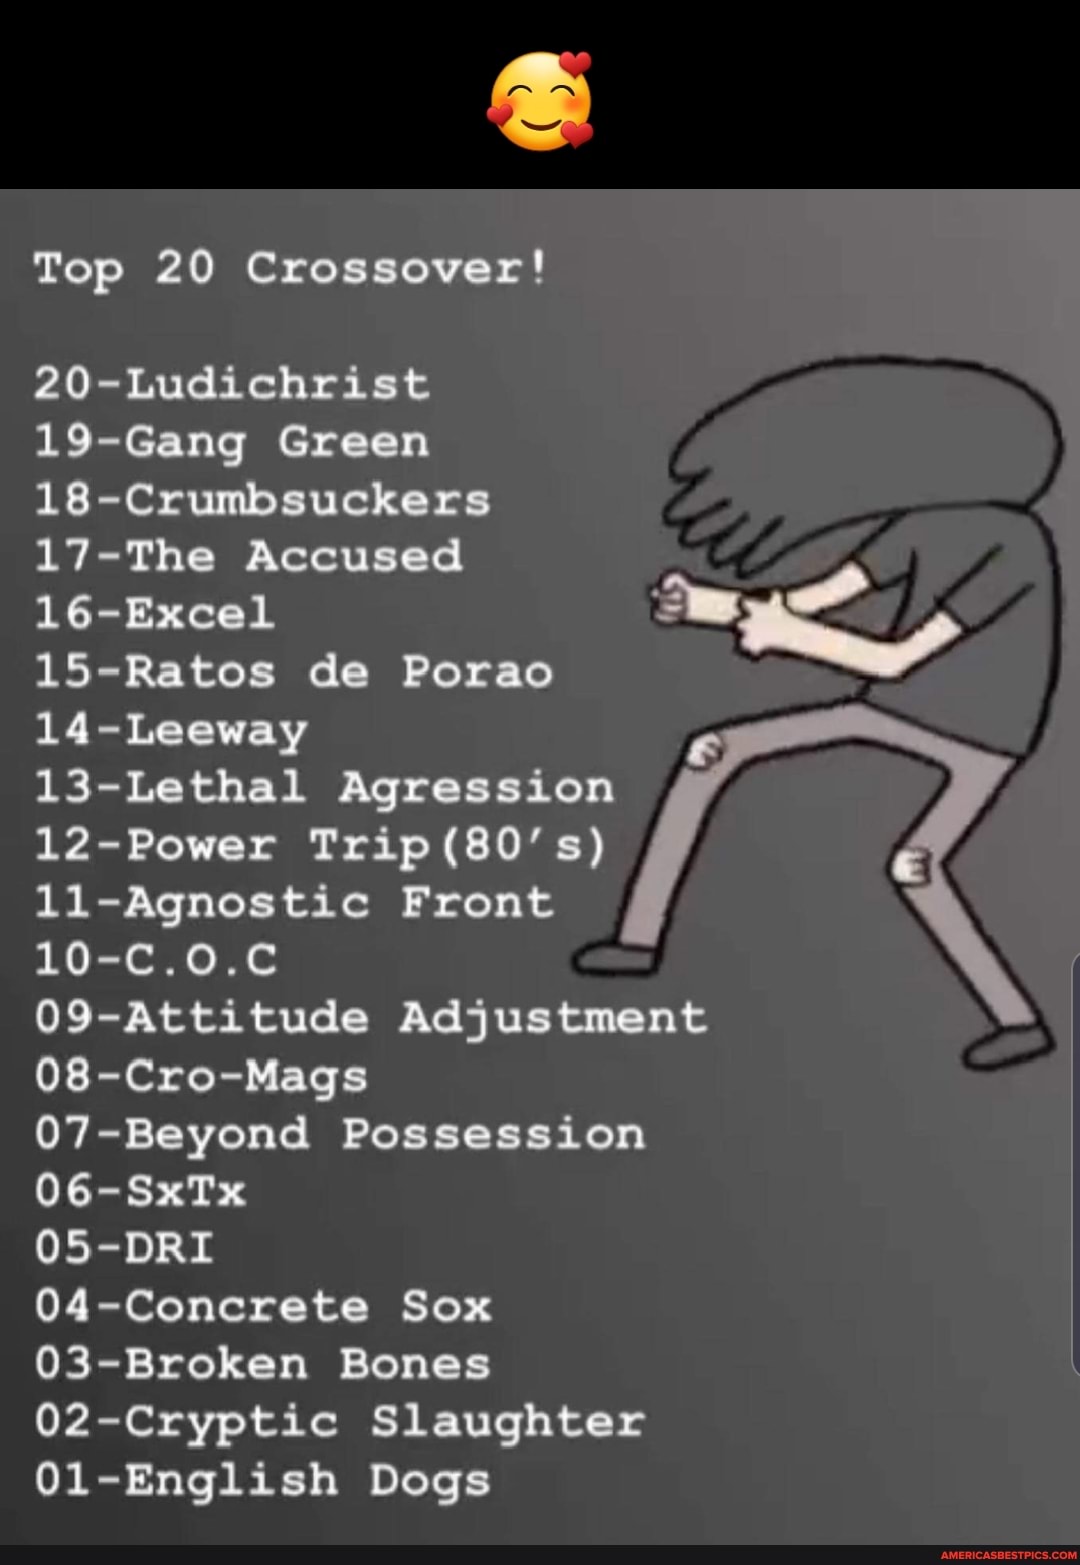 Top 20 Crossover! 20-Ludichrist 19-Gang Green 18-Crumbsuckers 17